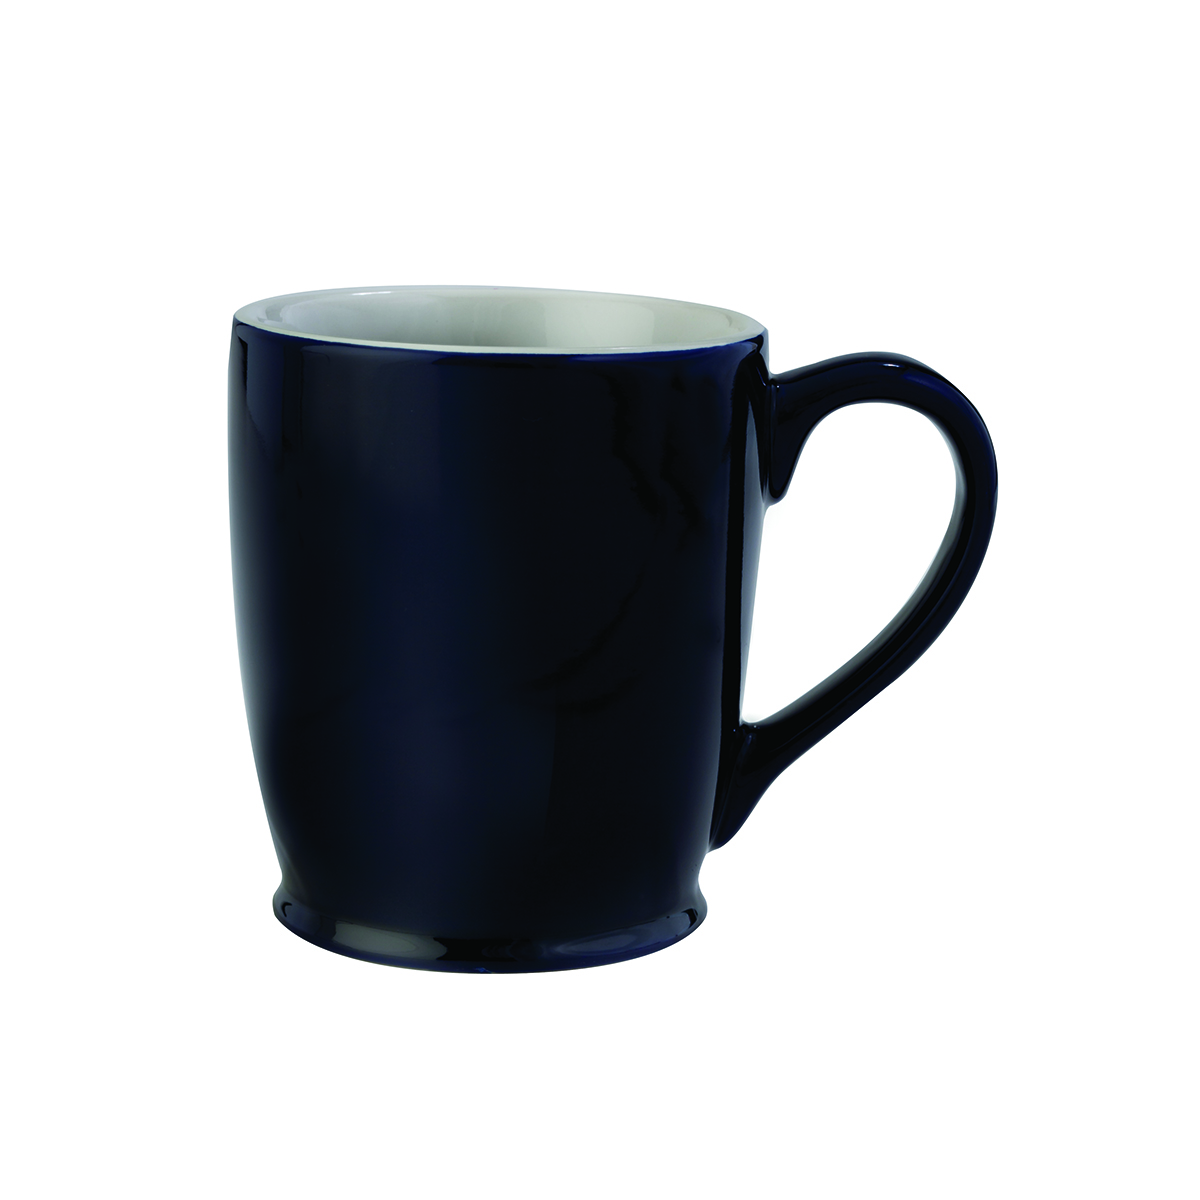 Black Stylish Café Mug - 16 oz